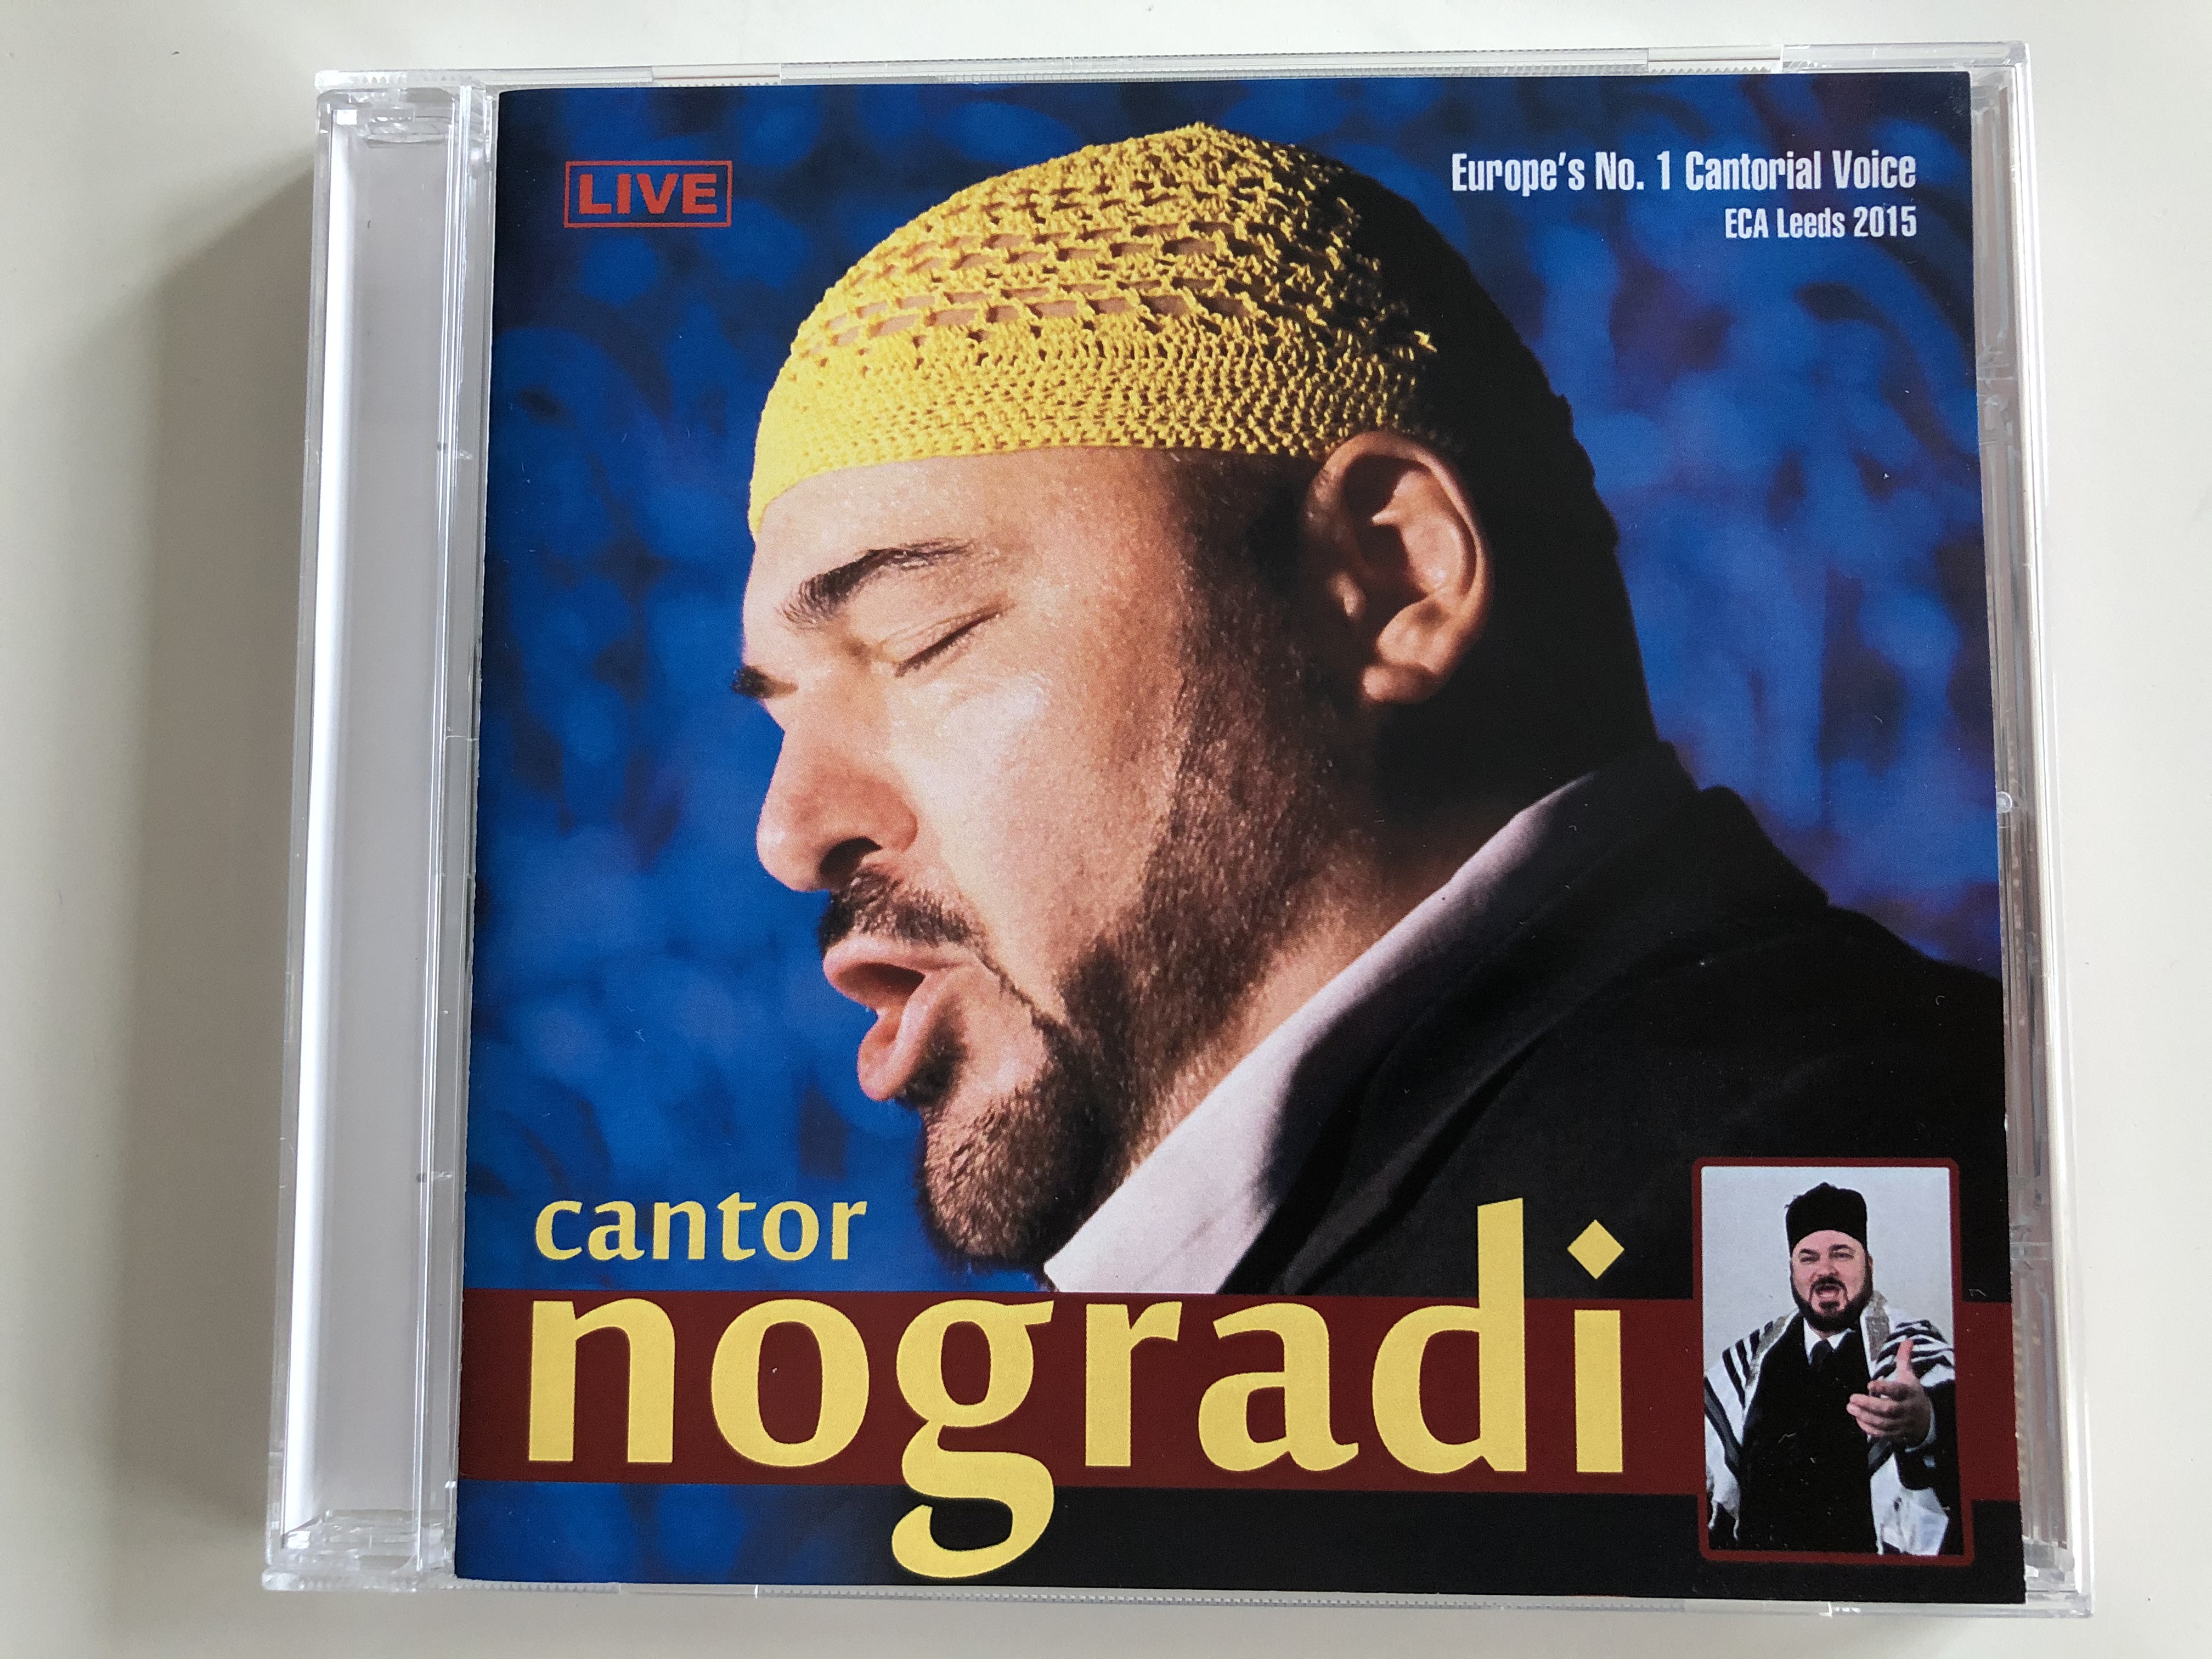 centor-nogradi-europe-s-no.-1-cantorai-voice-eca-leeds-2015-live-audio-cd-2015-1-.jpg